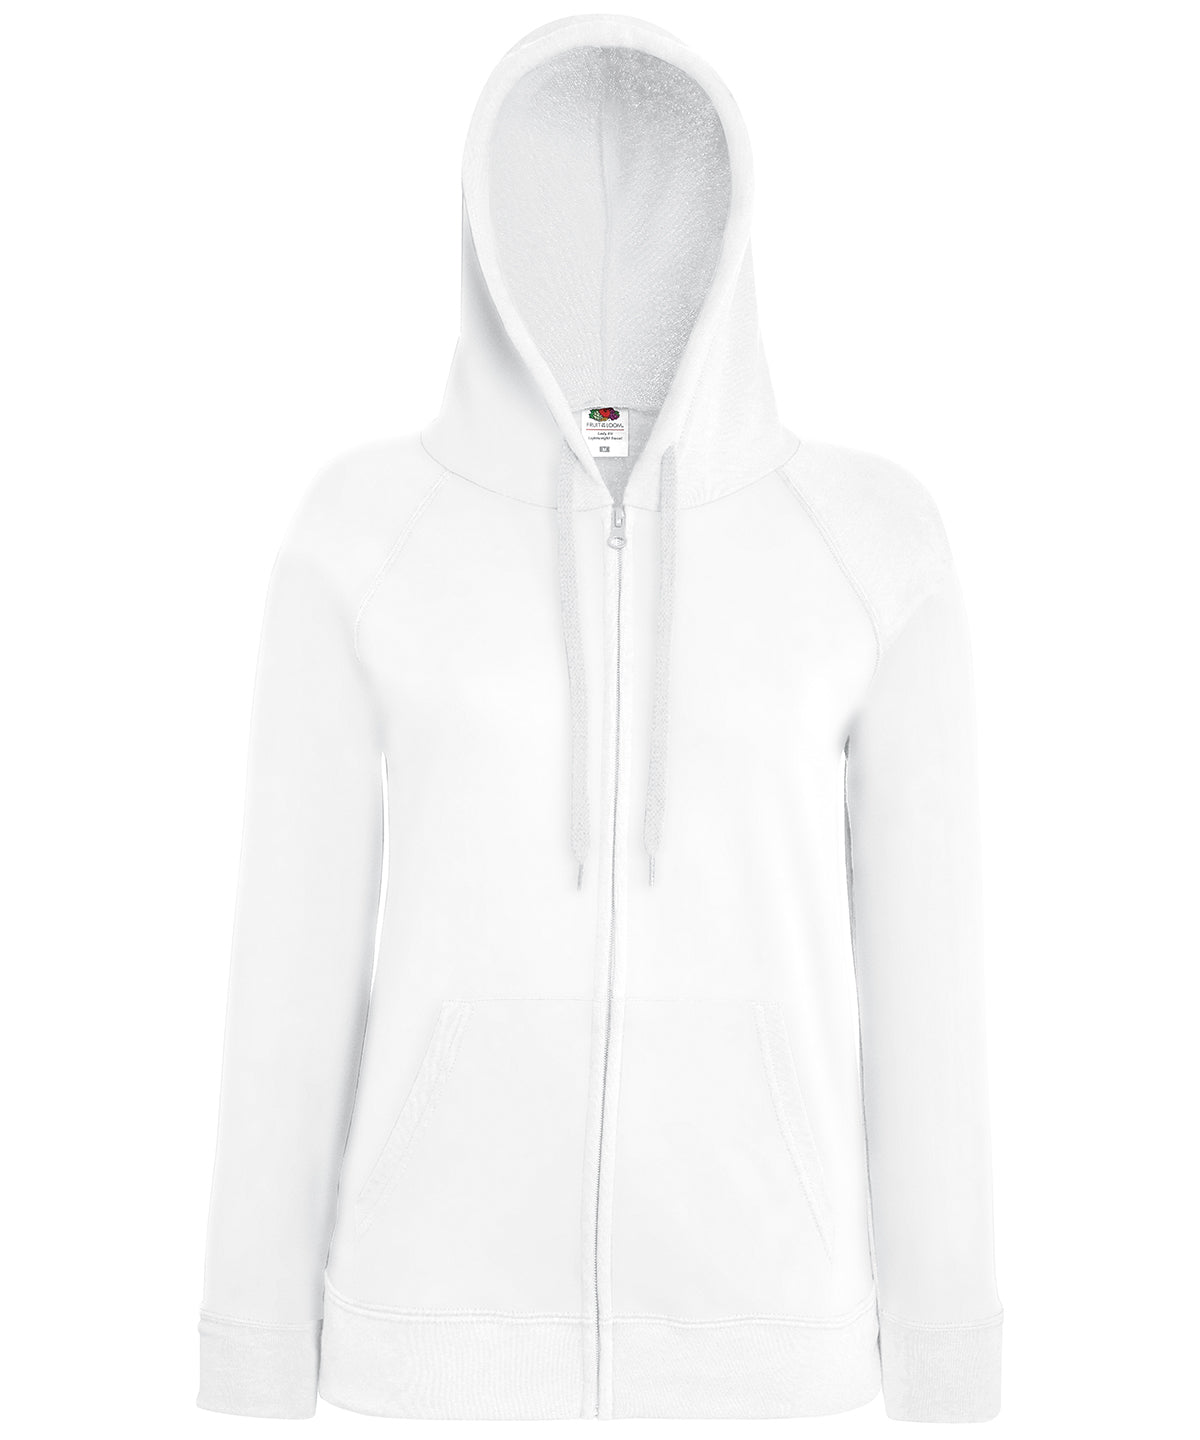 Hettupeysur - Women's Lightweight Hooded Sweatshirt Jacket